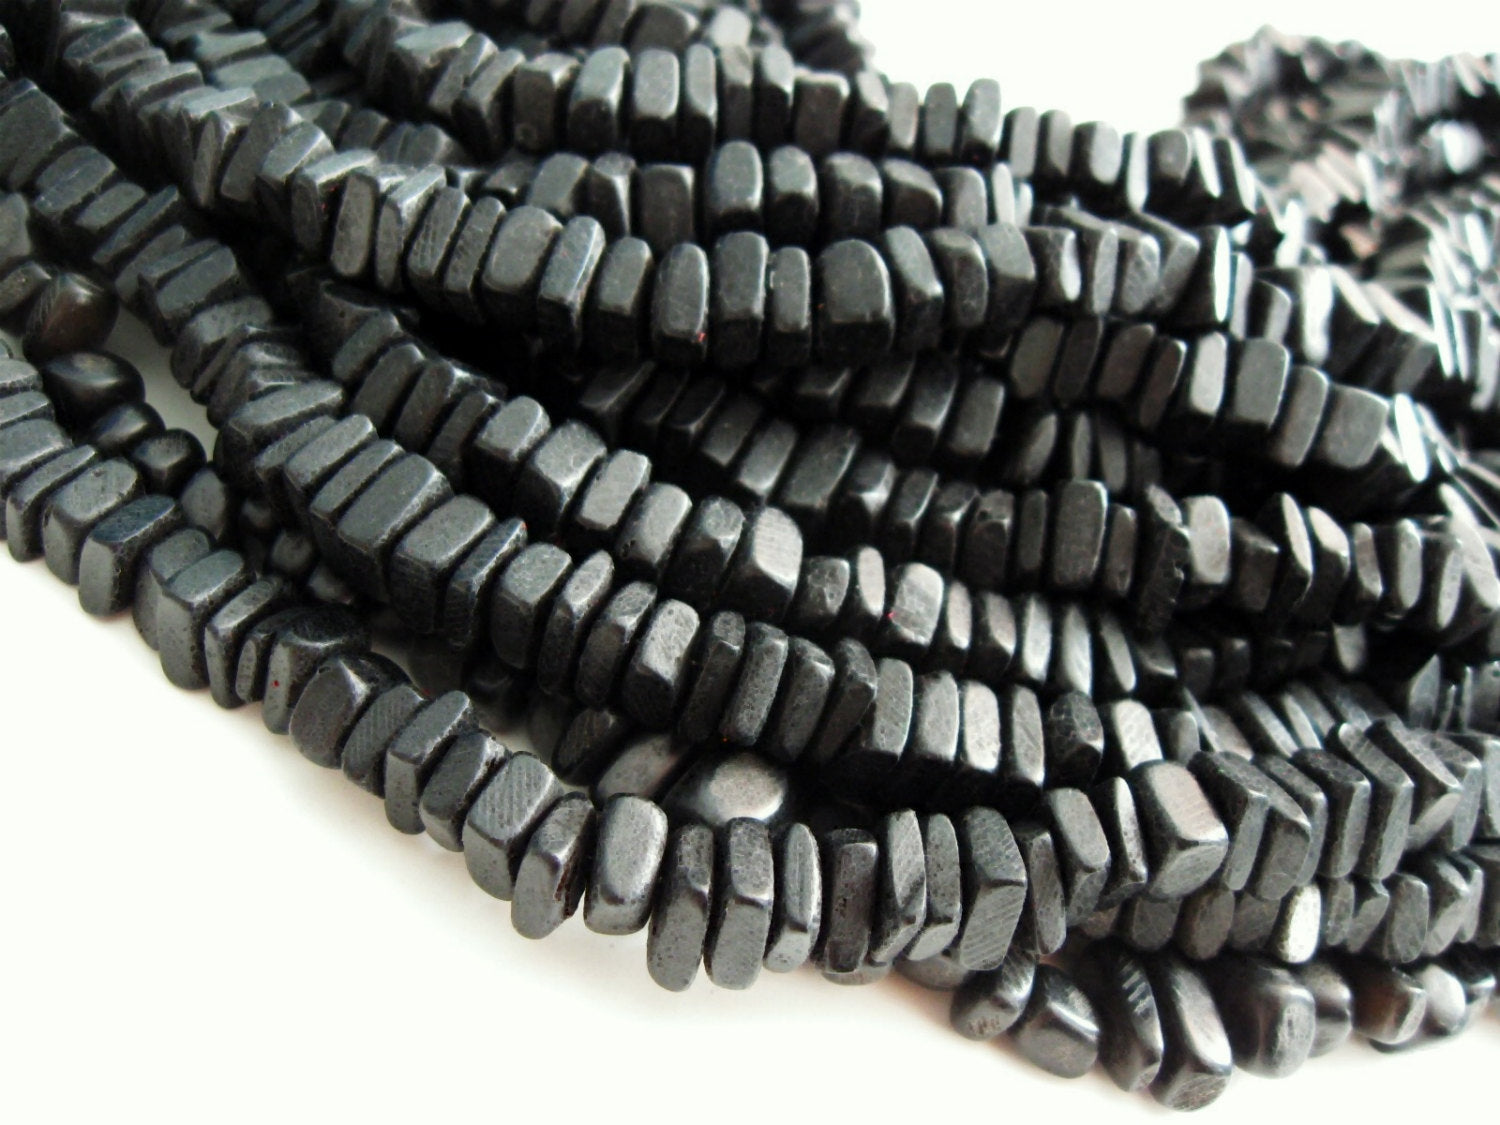 Black Wood CocoNut Shell Beads - Square cut beads 6mm - Half strand